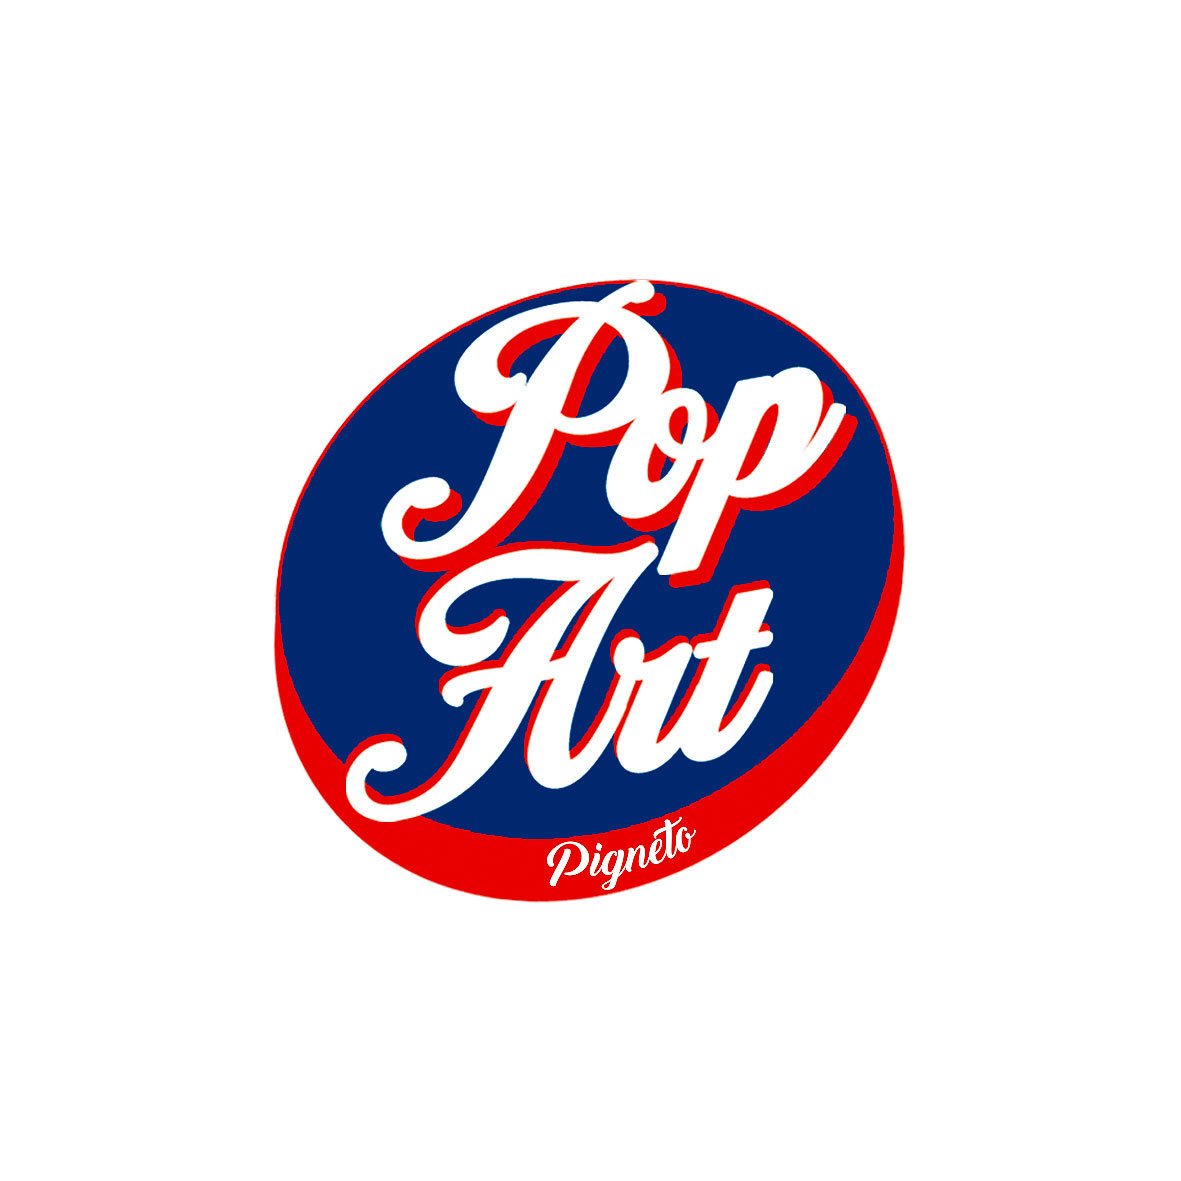 Pop Art Pigneto - 2015